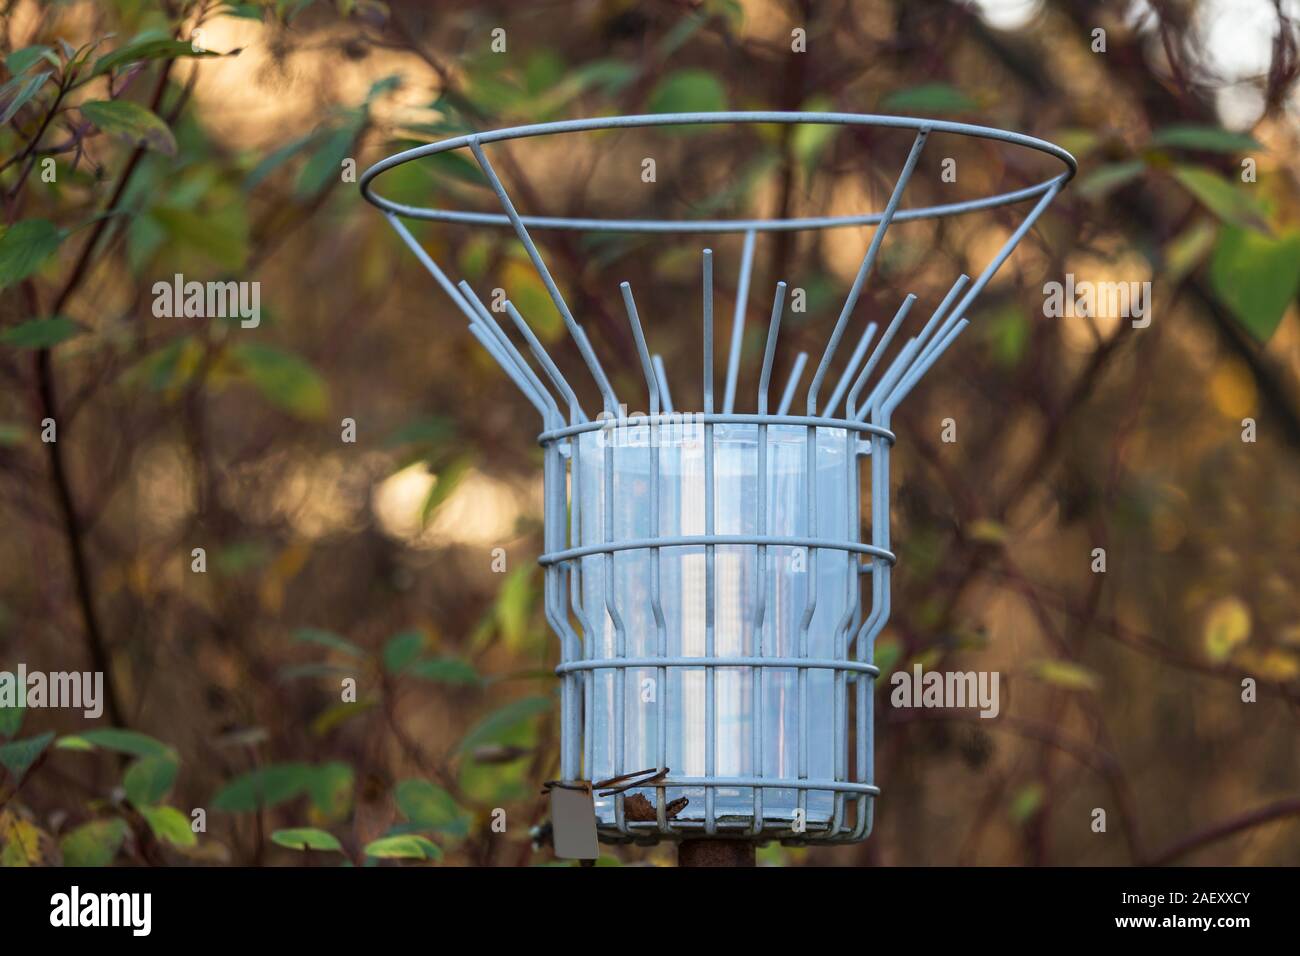 environmental protection measuring cup Stock Photo